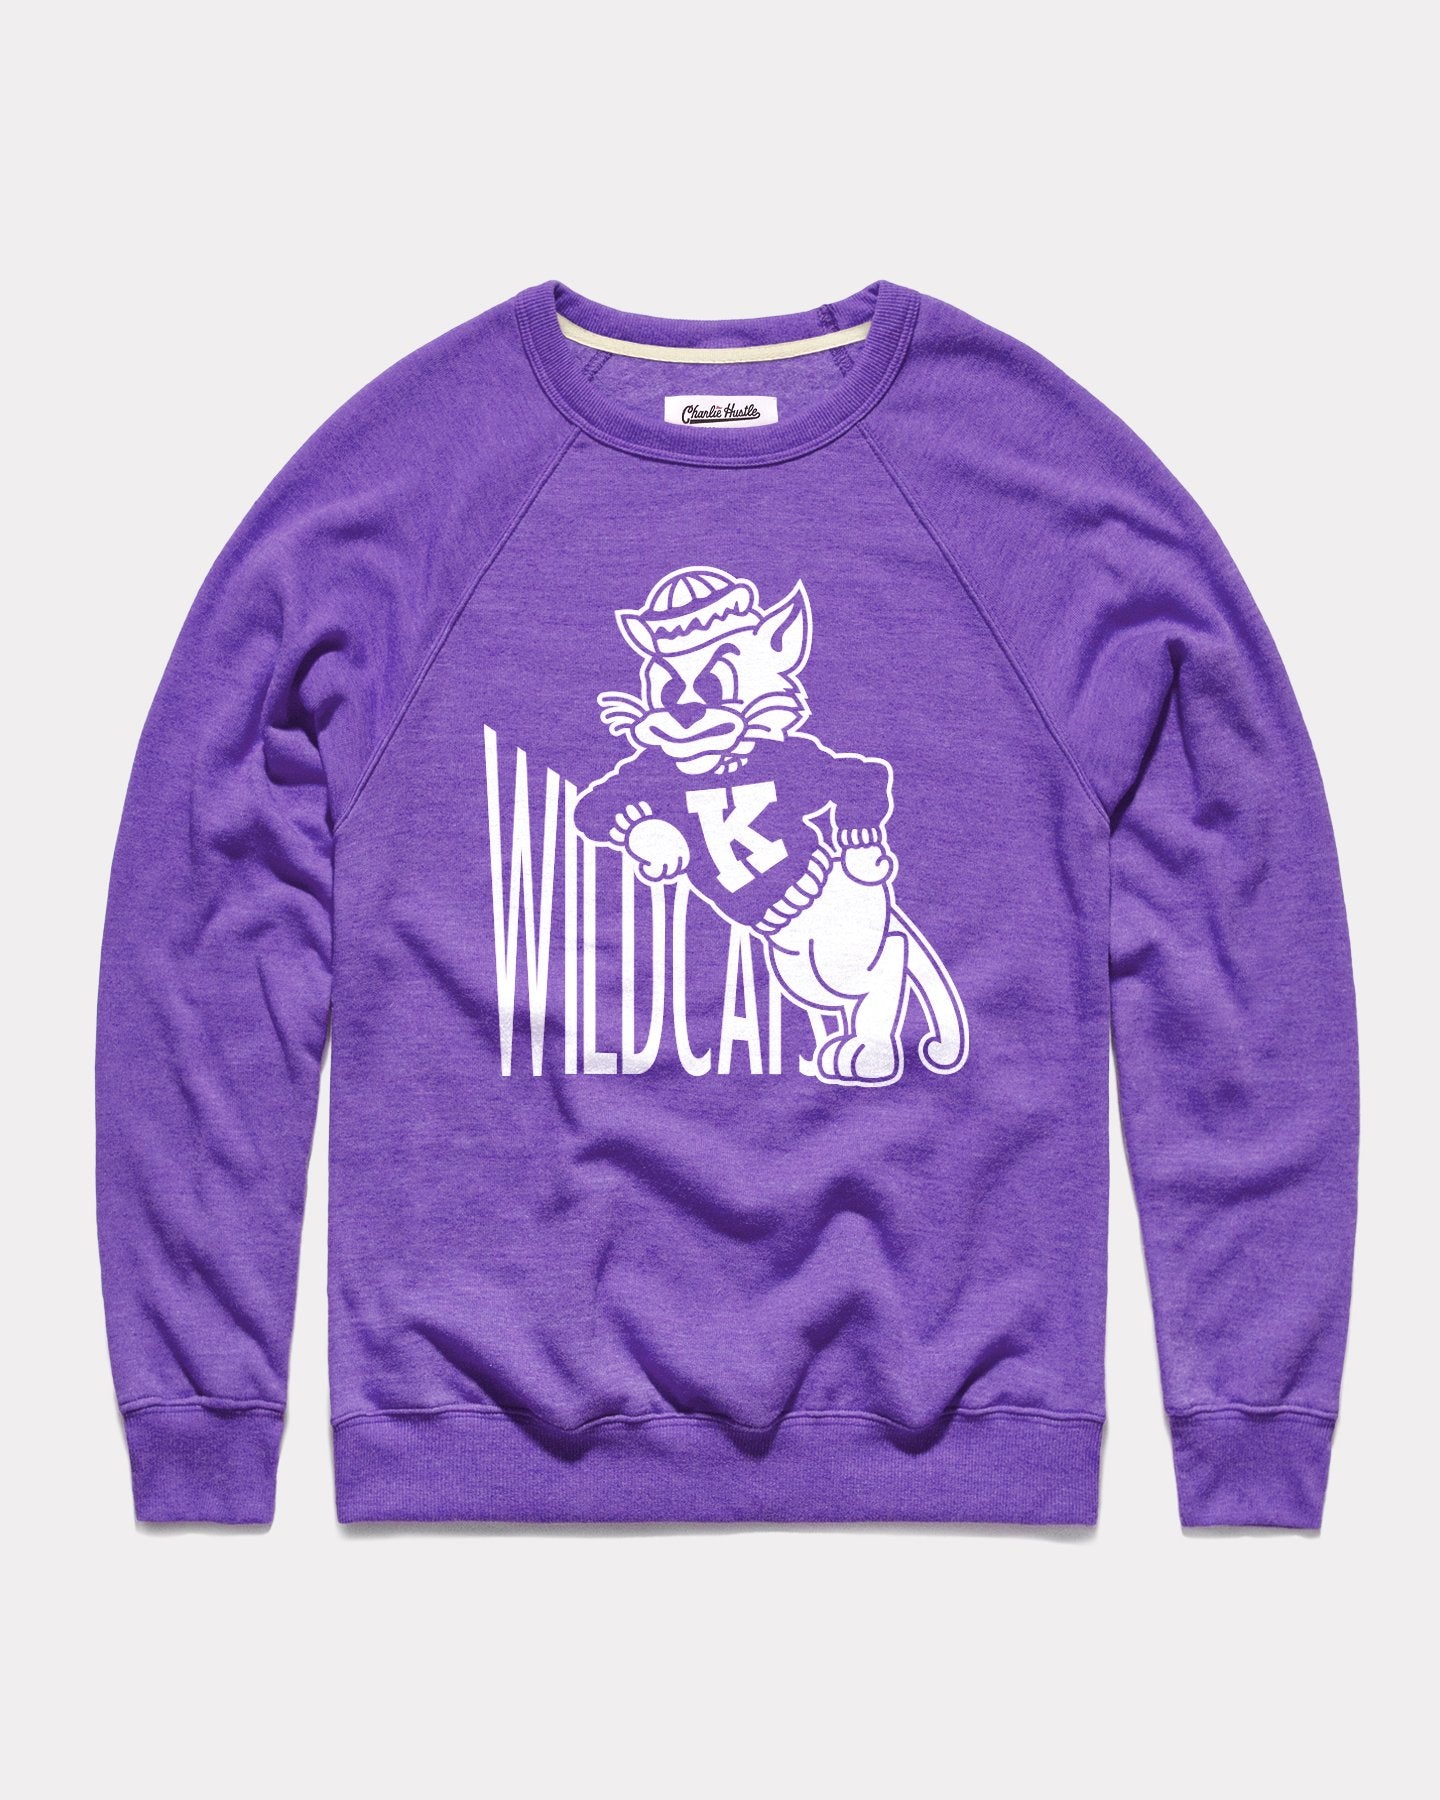 K-State Leaning Wildcat Vintage Purple Crewneck Sweatshirt